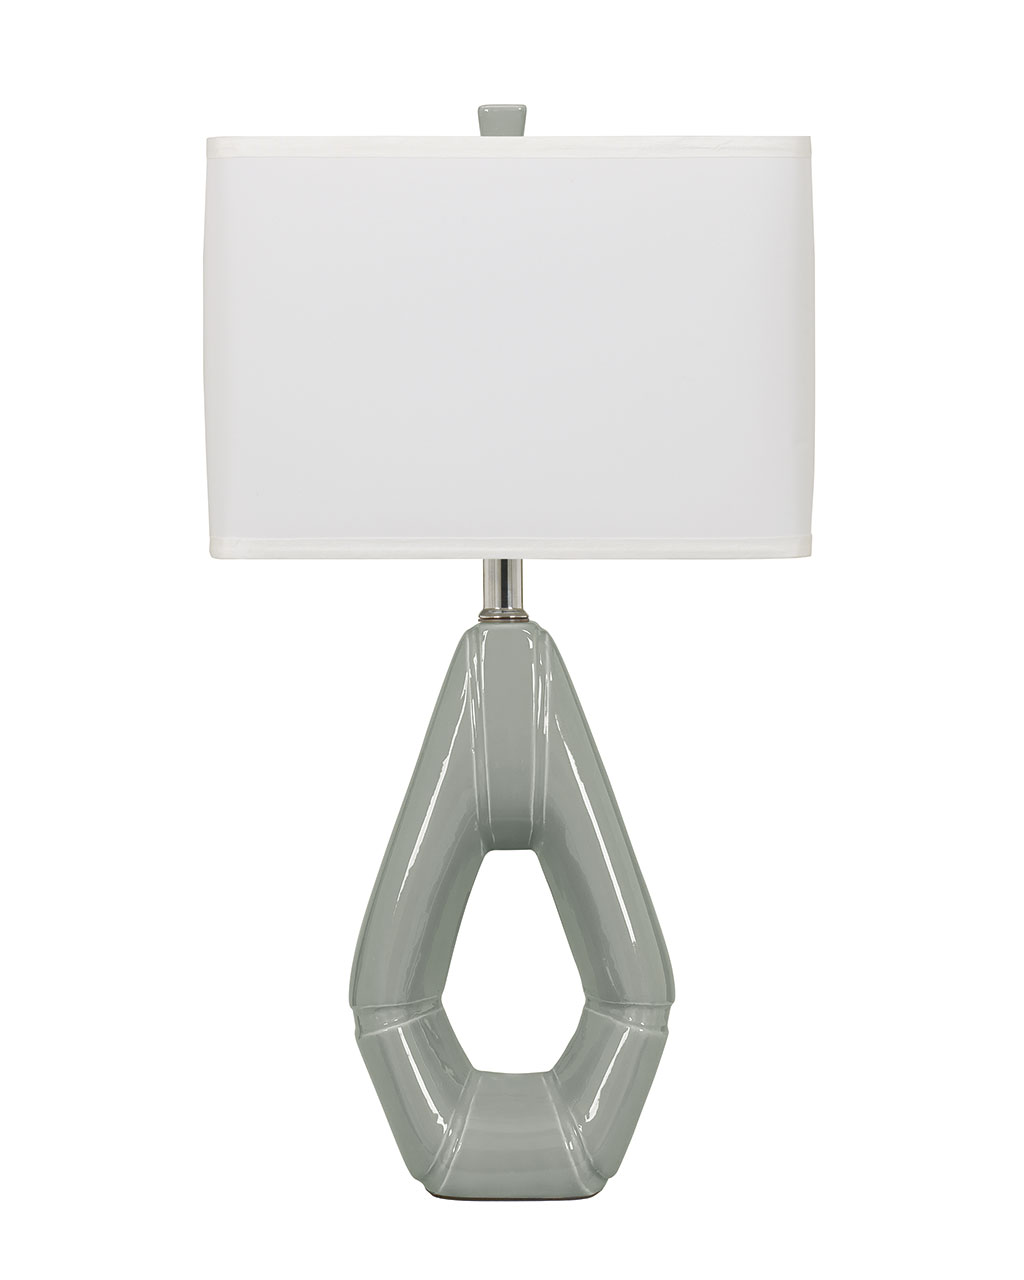 L118304 Table Lamp - Gray